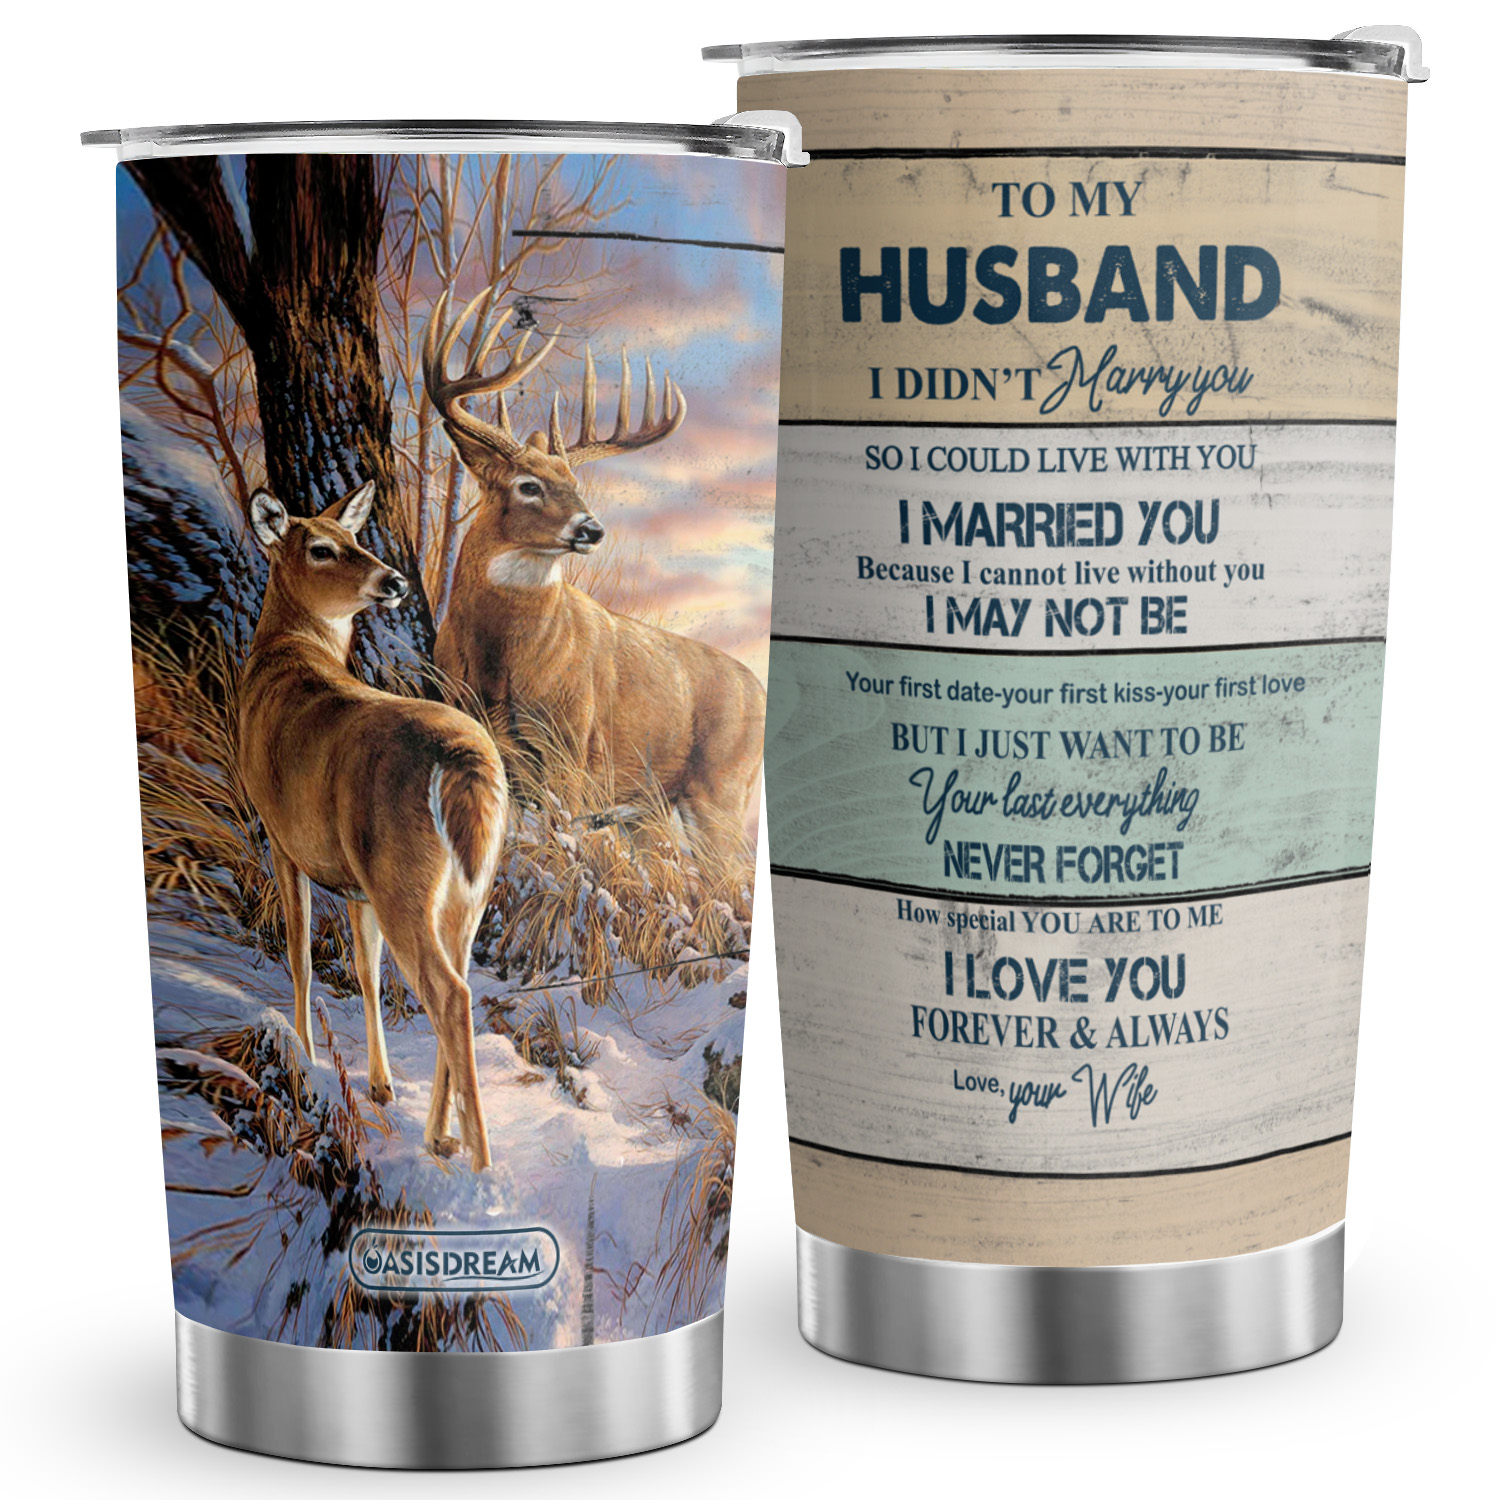 Whitetail Deer Yeti 30oz Tumbler Insulated Tumbler Gift for Him